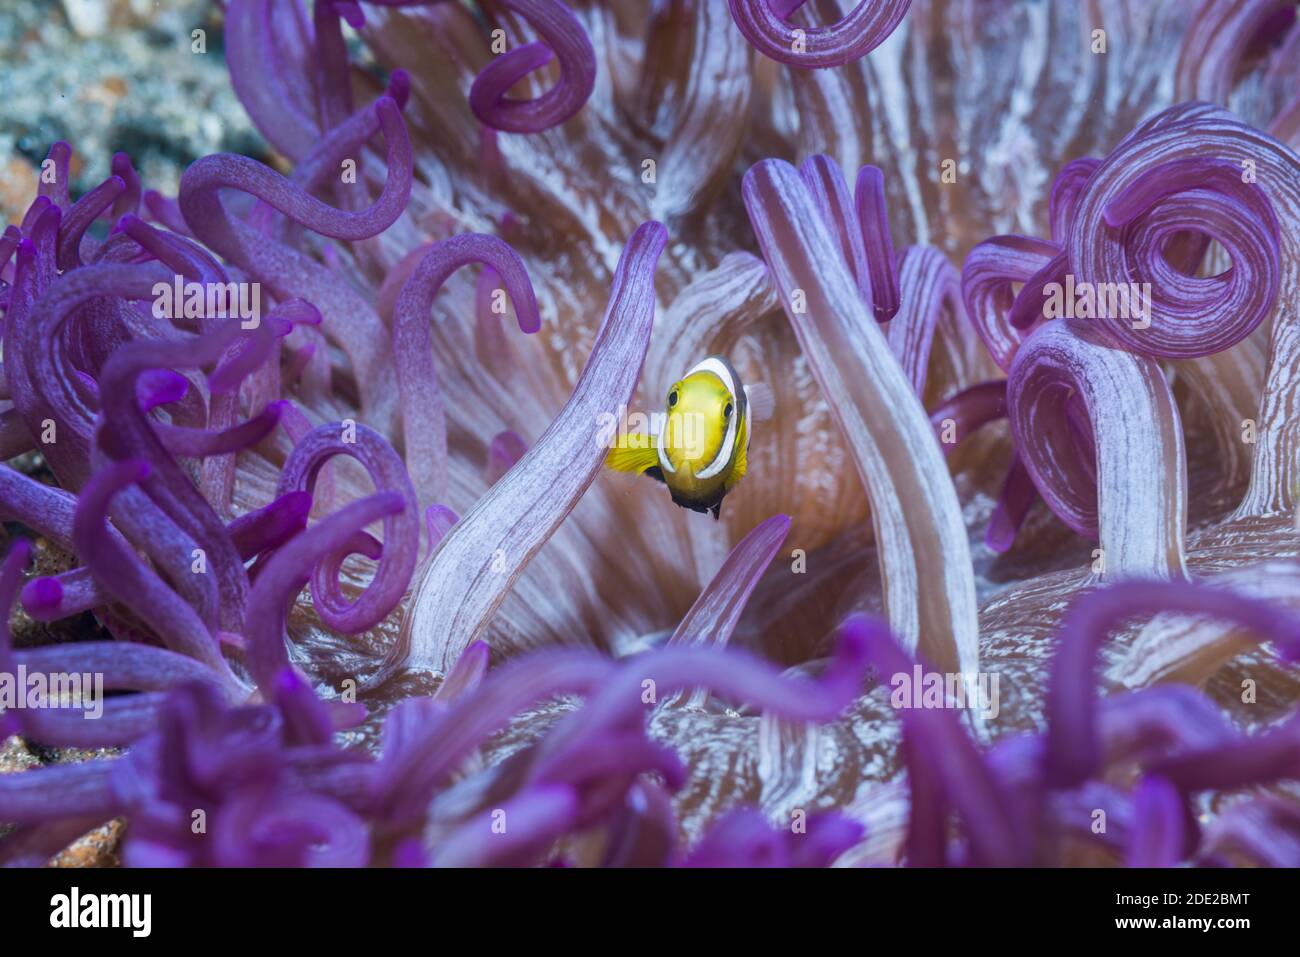 A juvenile Black saddleback anemonefish in a Corkscrew or Long Tentacle Anemone [Macrodactyla doreensis].  Lembeh Strait, North Sulawesi, Indonesia. Stock Photo